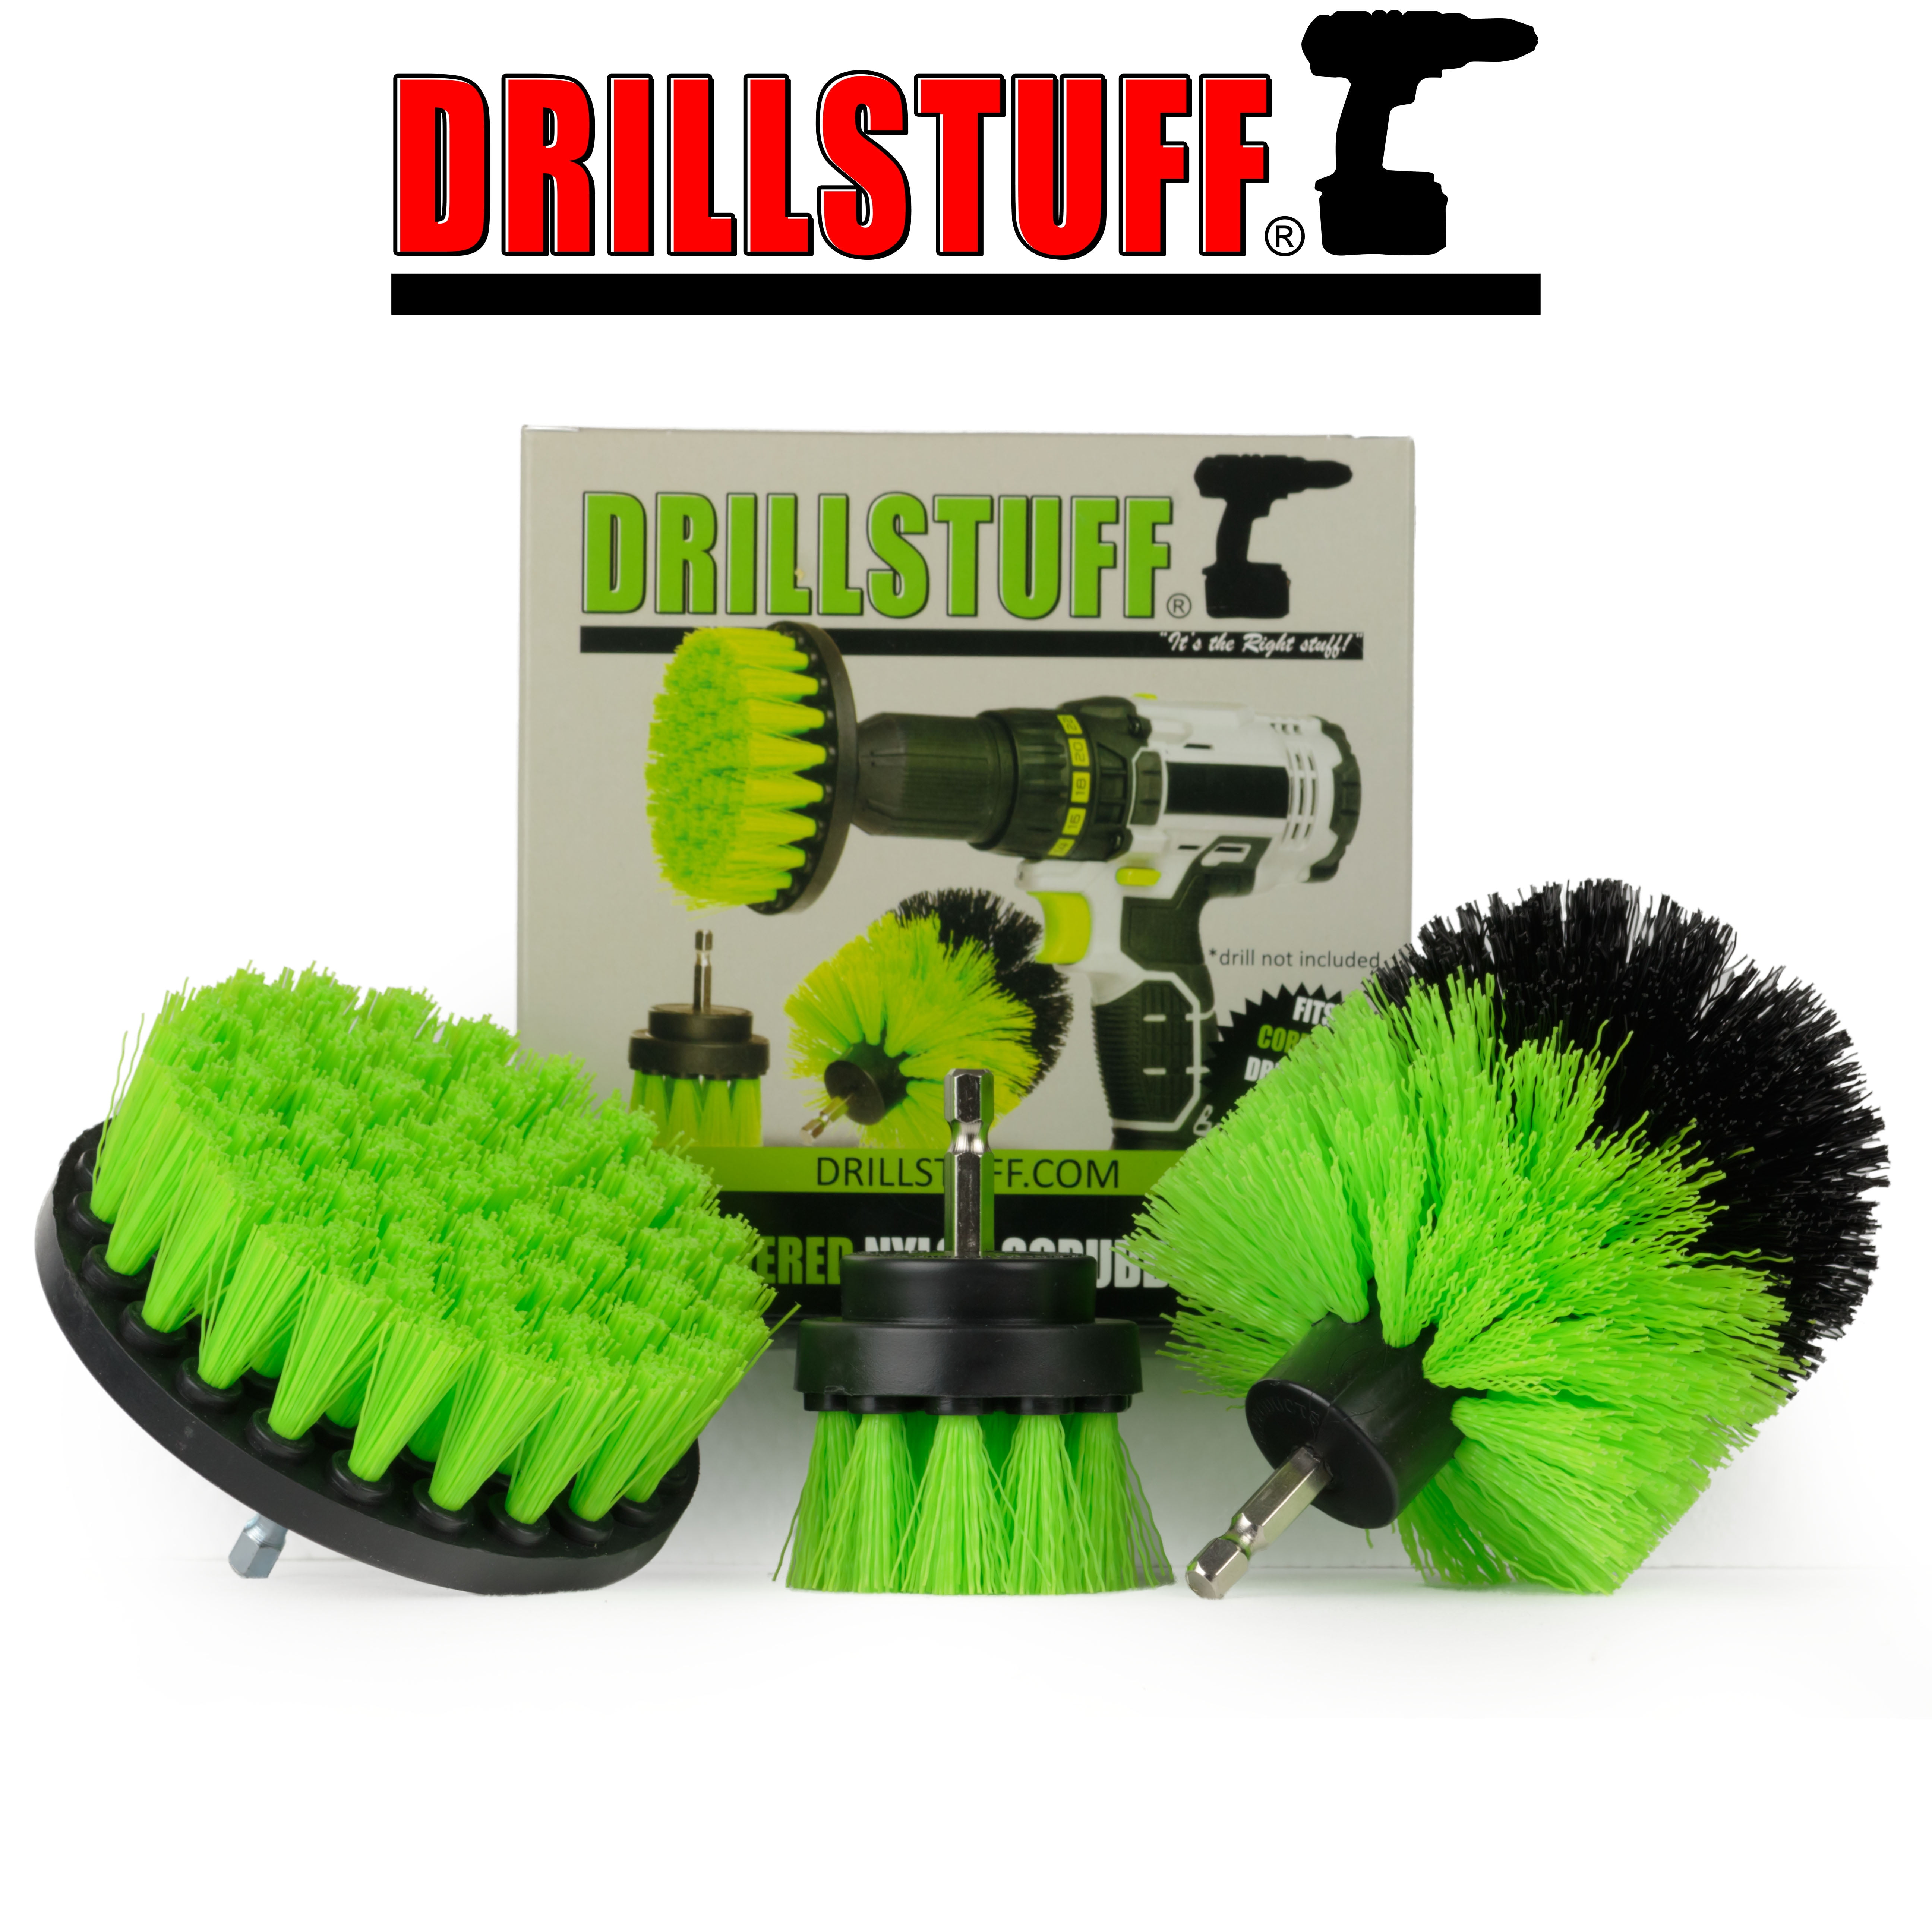 Drillstuff Kitchen Accessories - Cleaning Supplies - Drill Brush - Stove - Oven - Dish Brush - Sink - Countertop - Backsplash - Scrub Brush - Cooktop